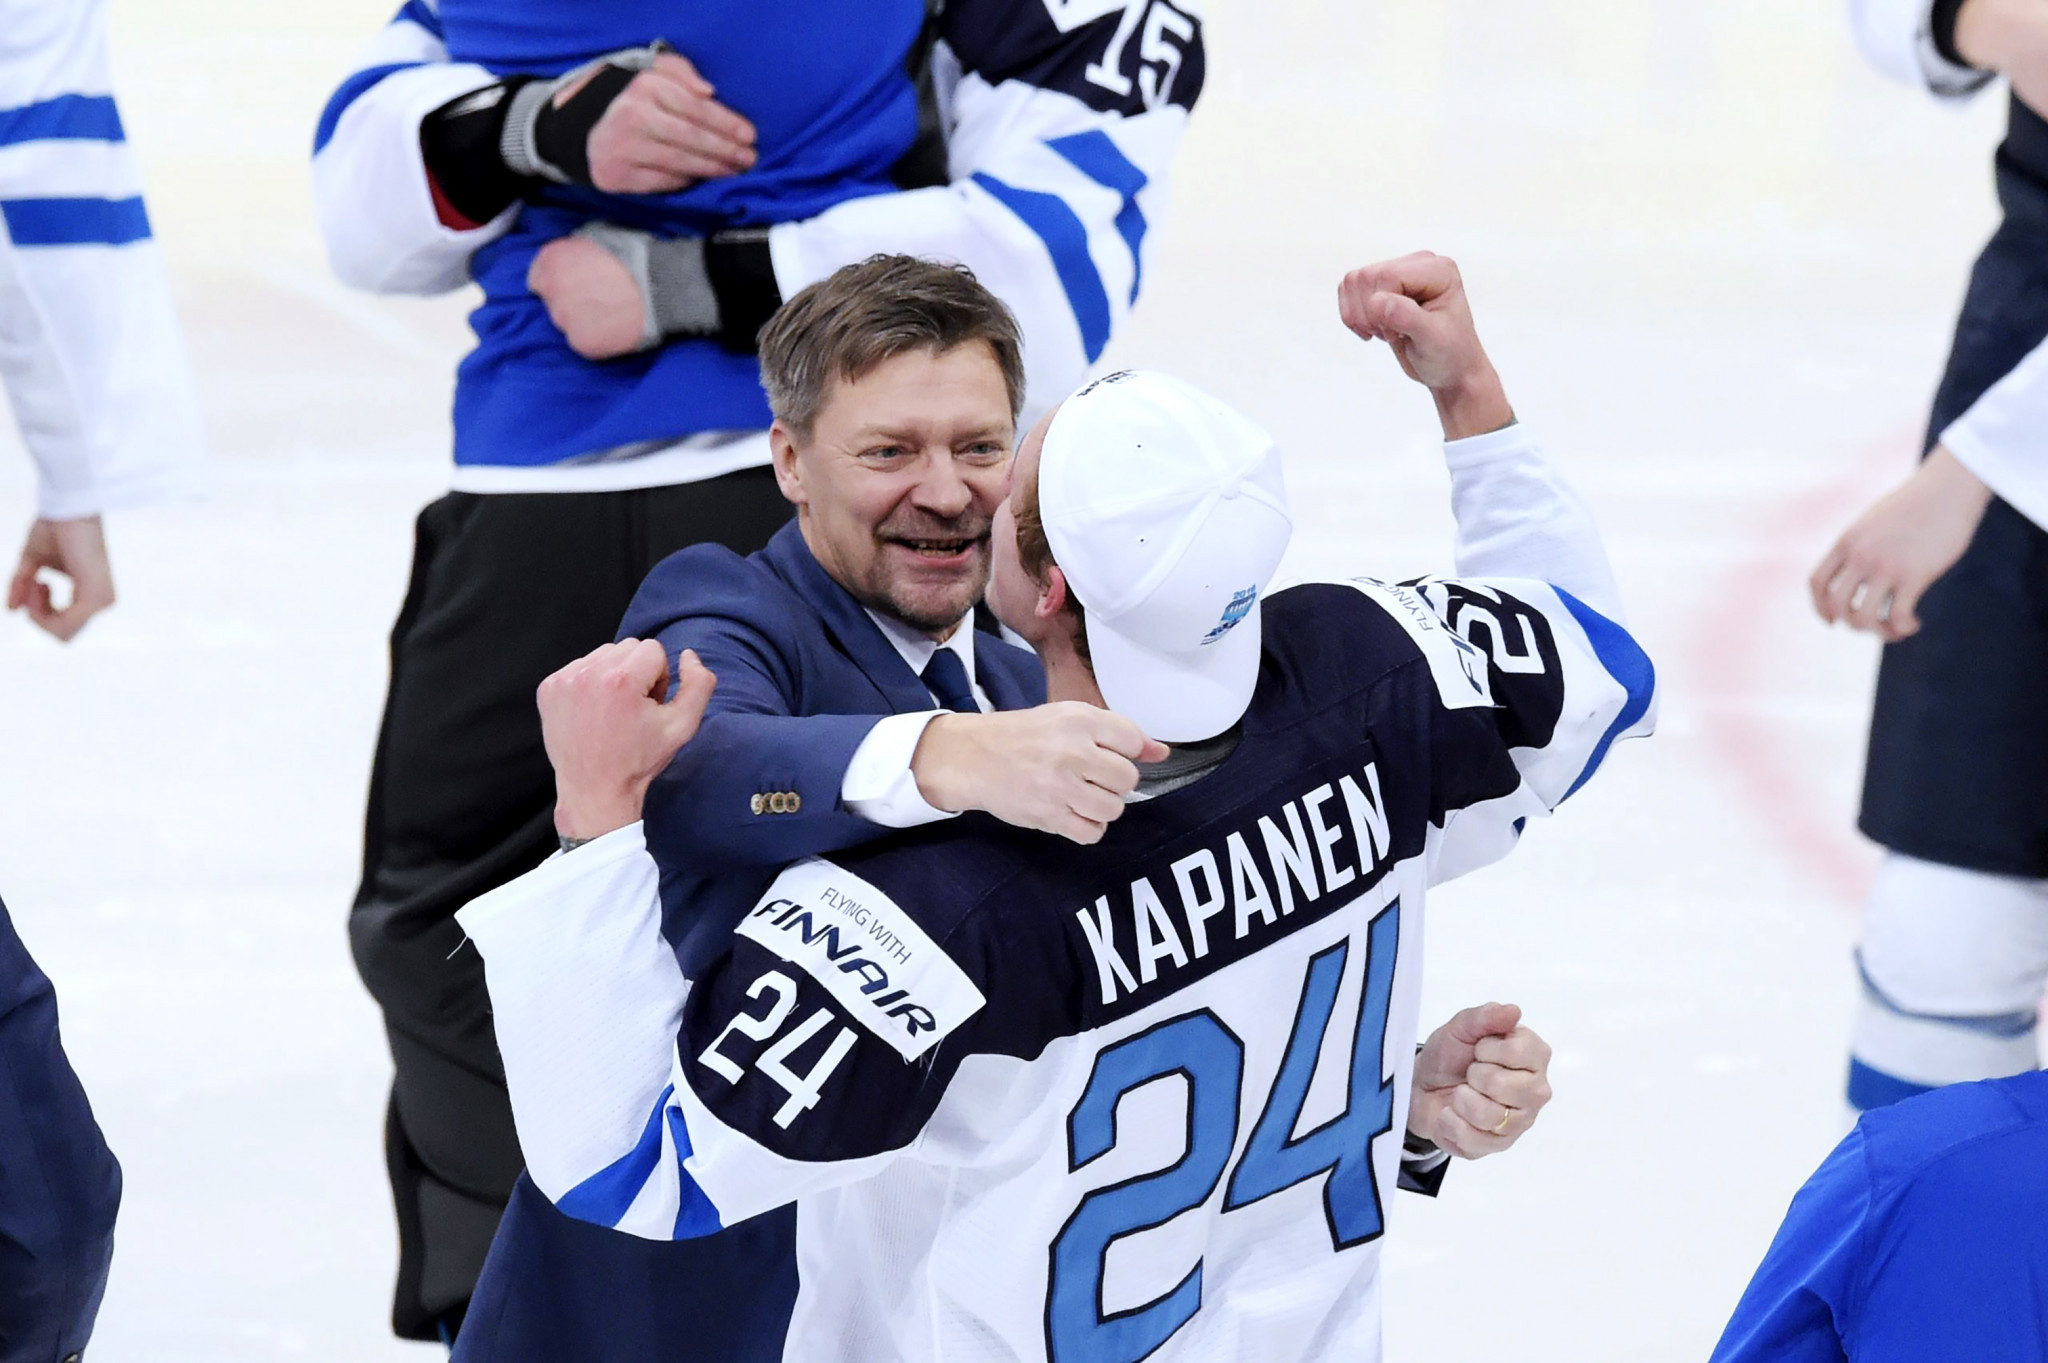 Double World Championship winner Jalonen extends contract with Finnish ice hockey team